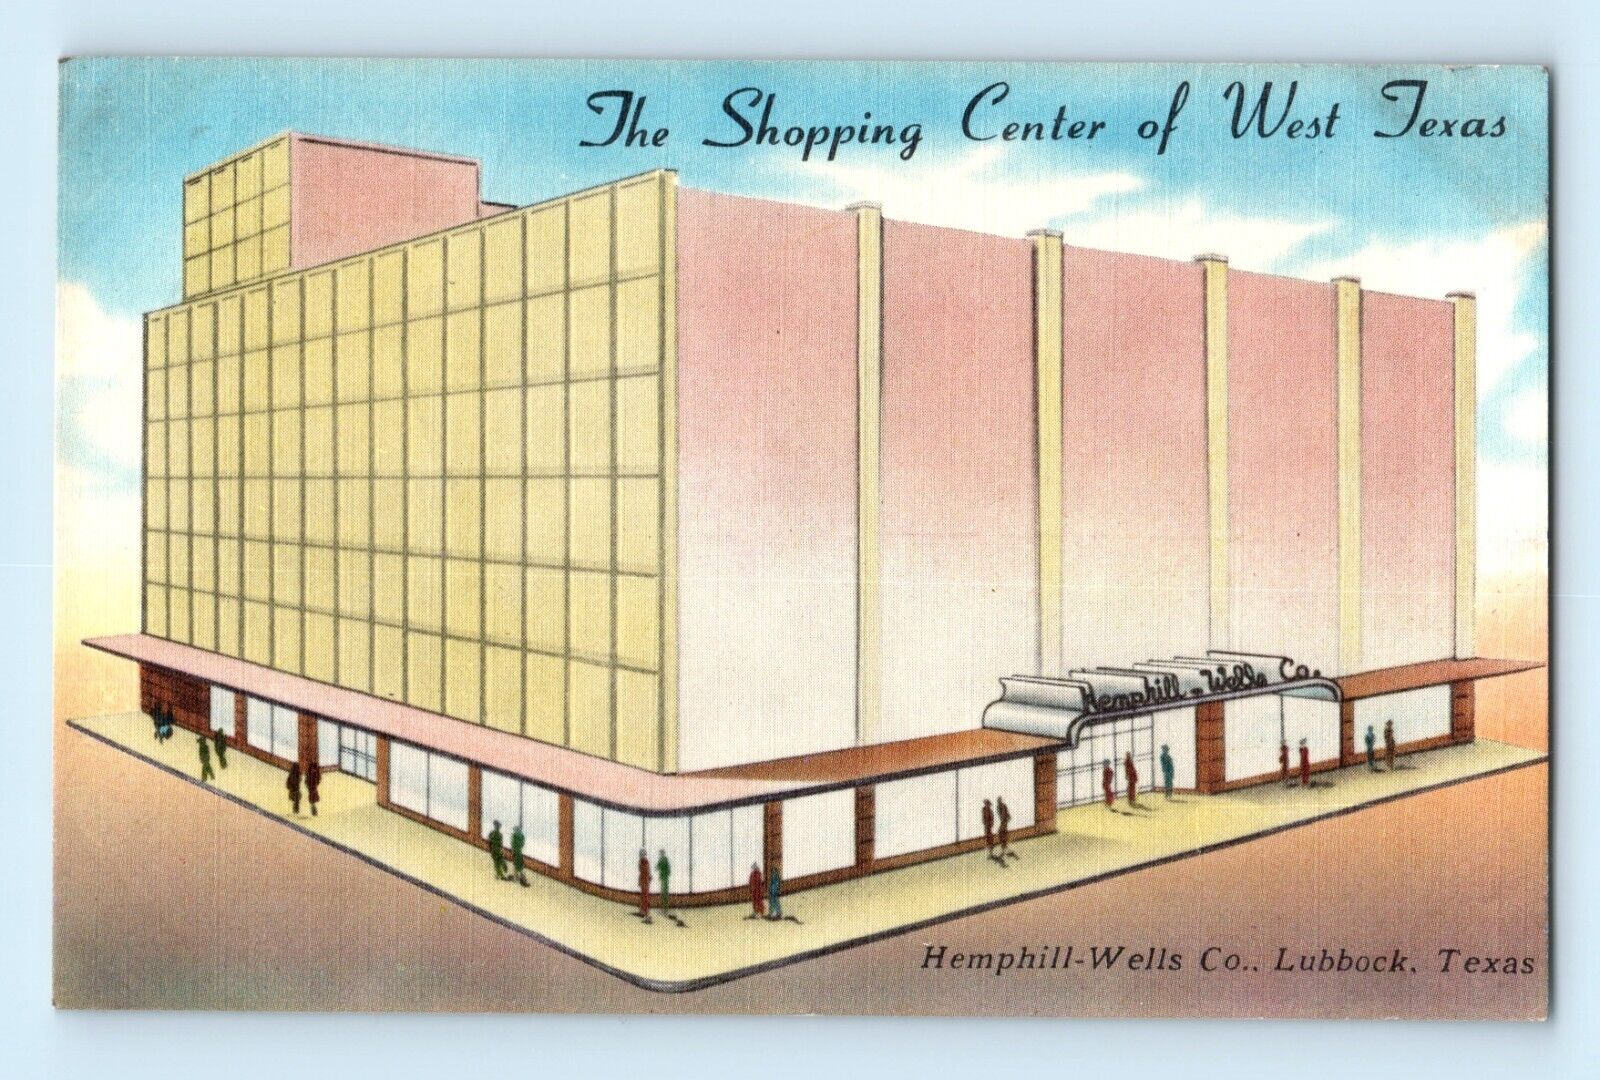 Hemphill-Wells Co Lubbock Texas The Shopping Center of West Texas Postcard C2